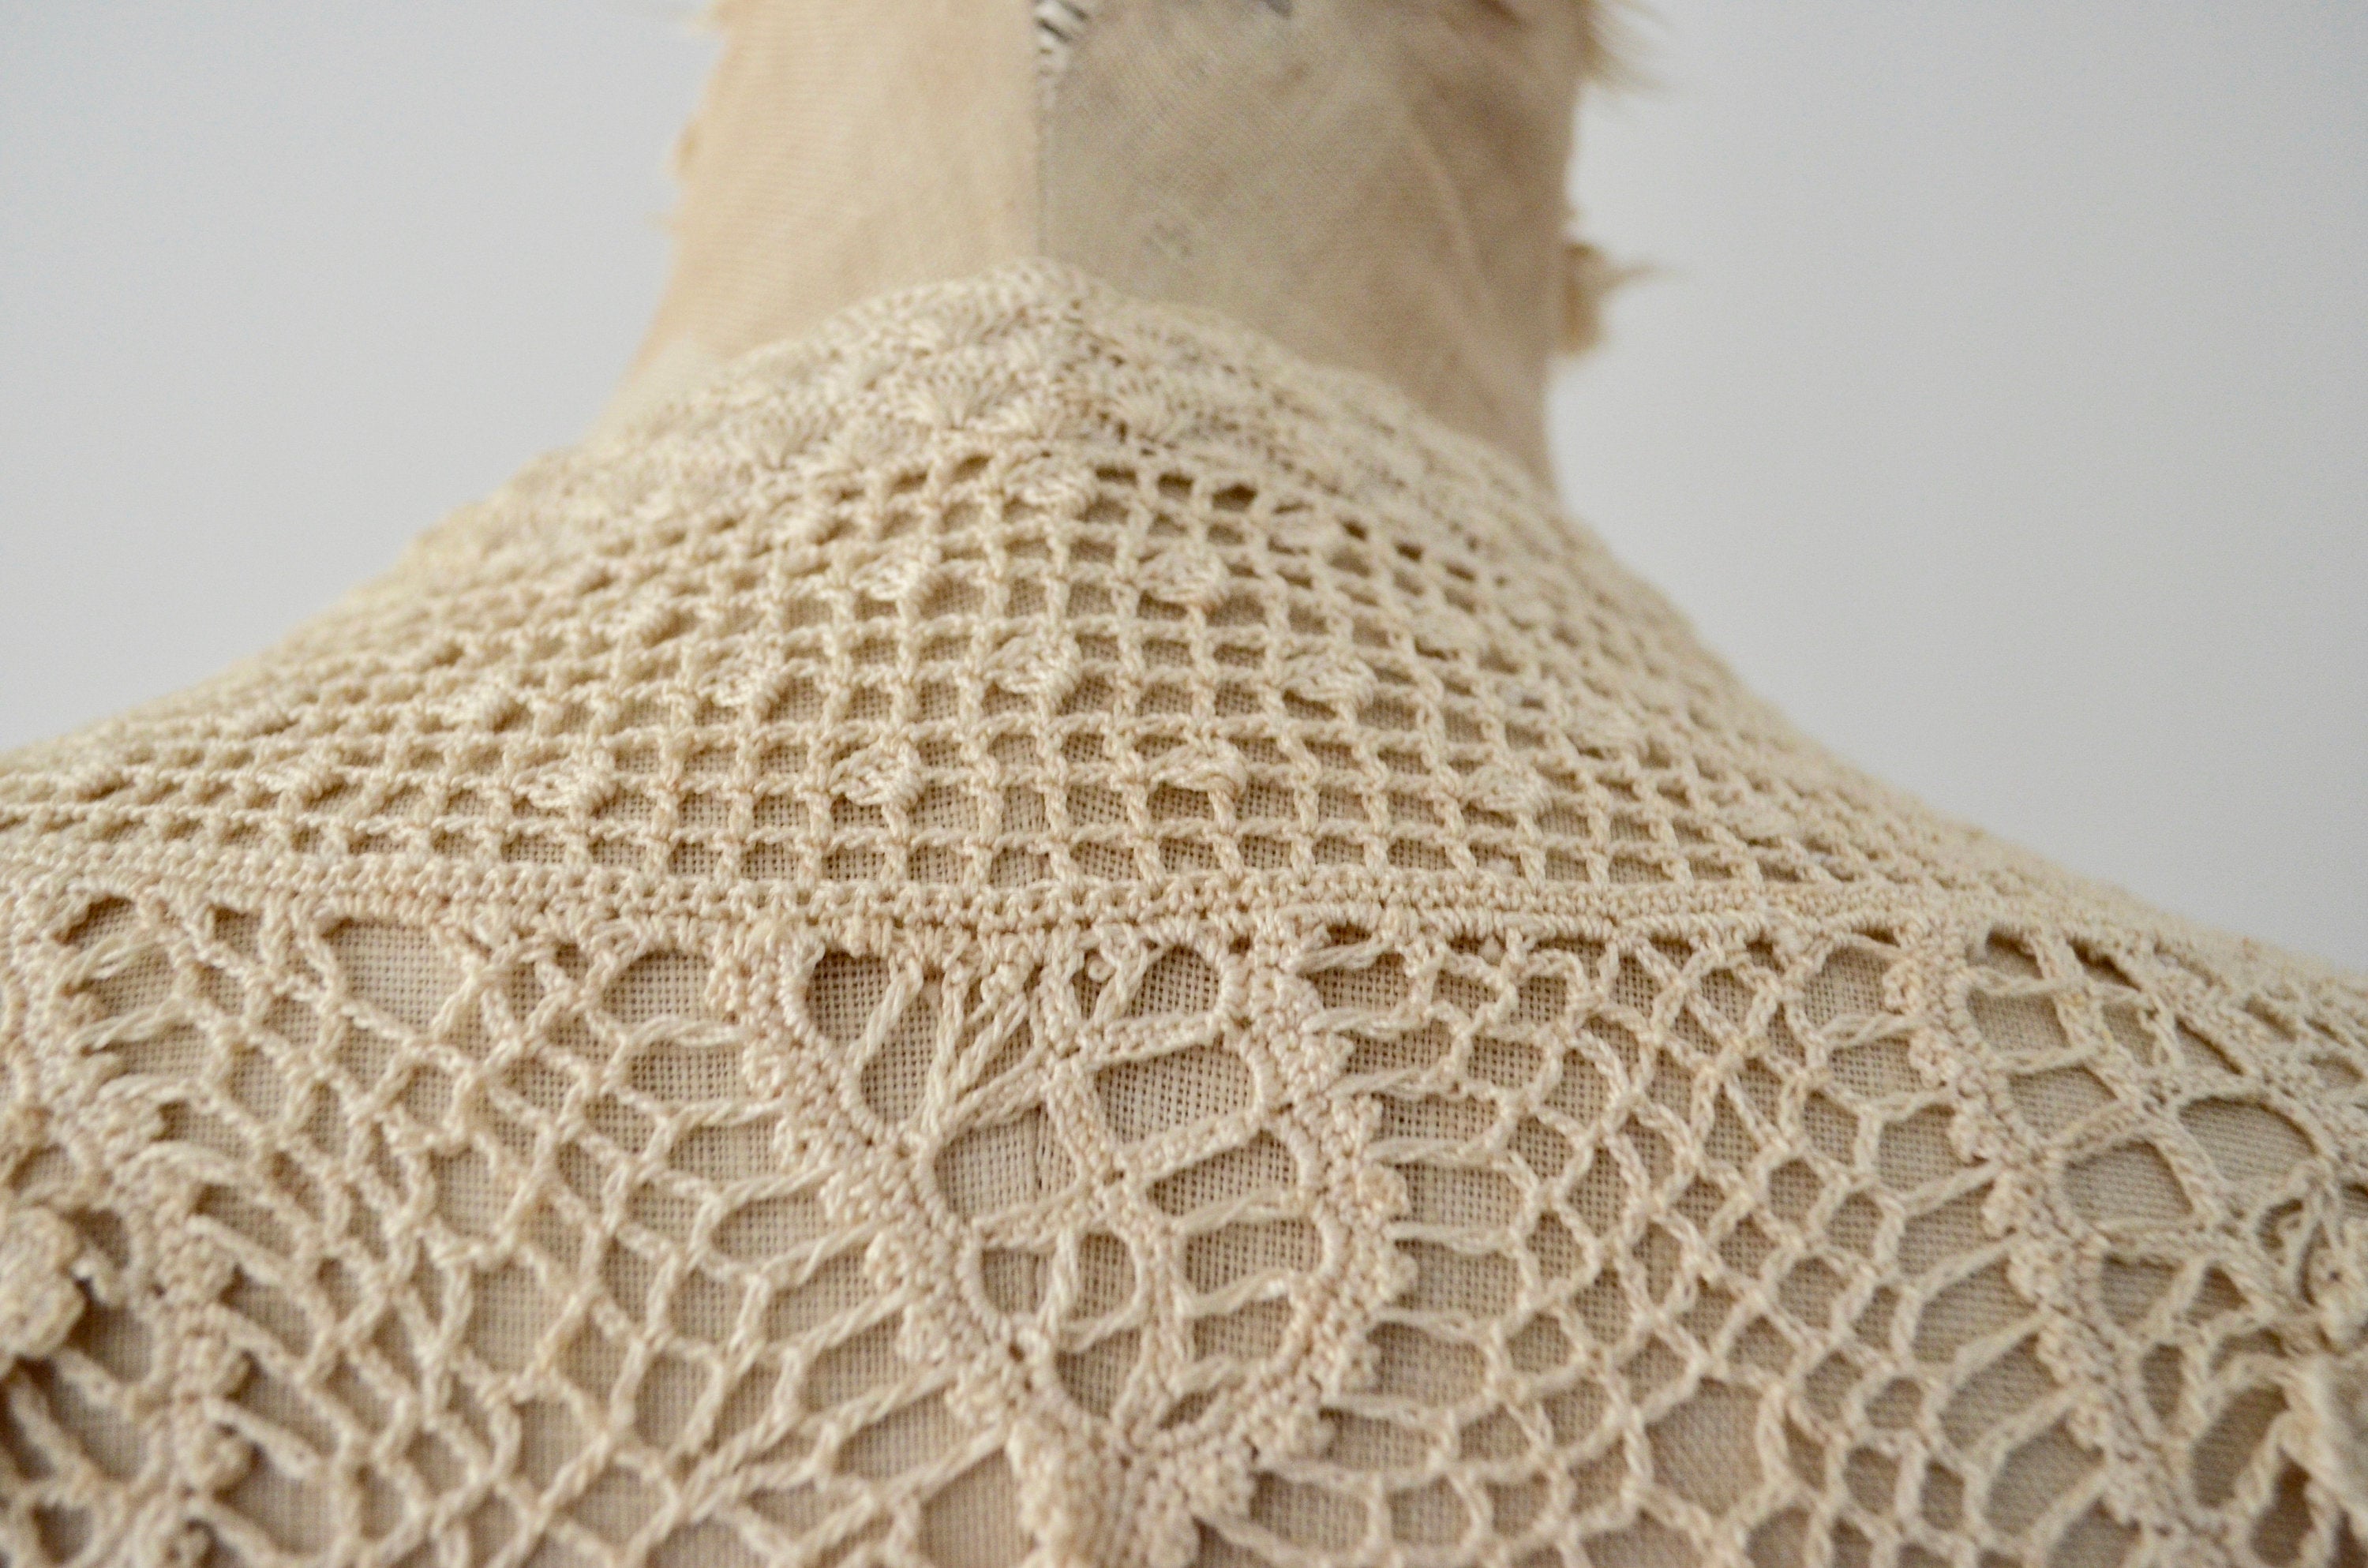 1970S Boho Chic Long Crochet Cover Up Vest Slouchy Cardigan Romantic Beige Paisley W Mini Flowers